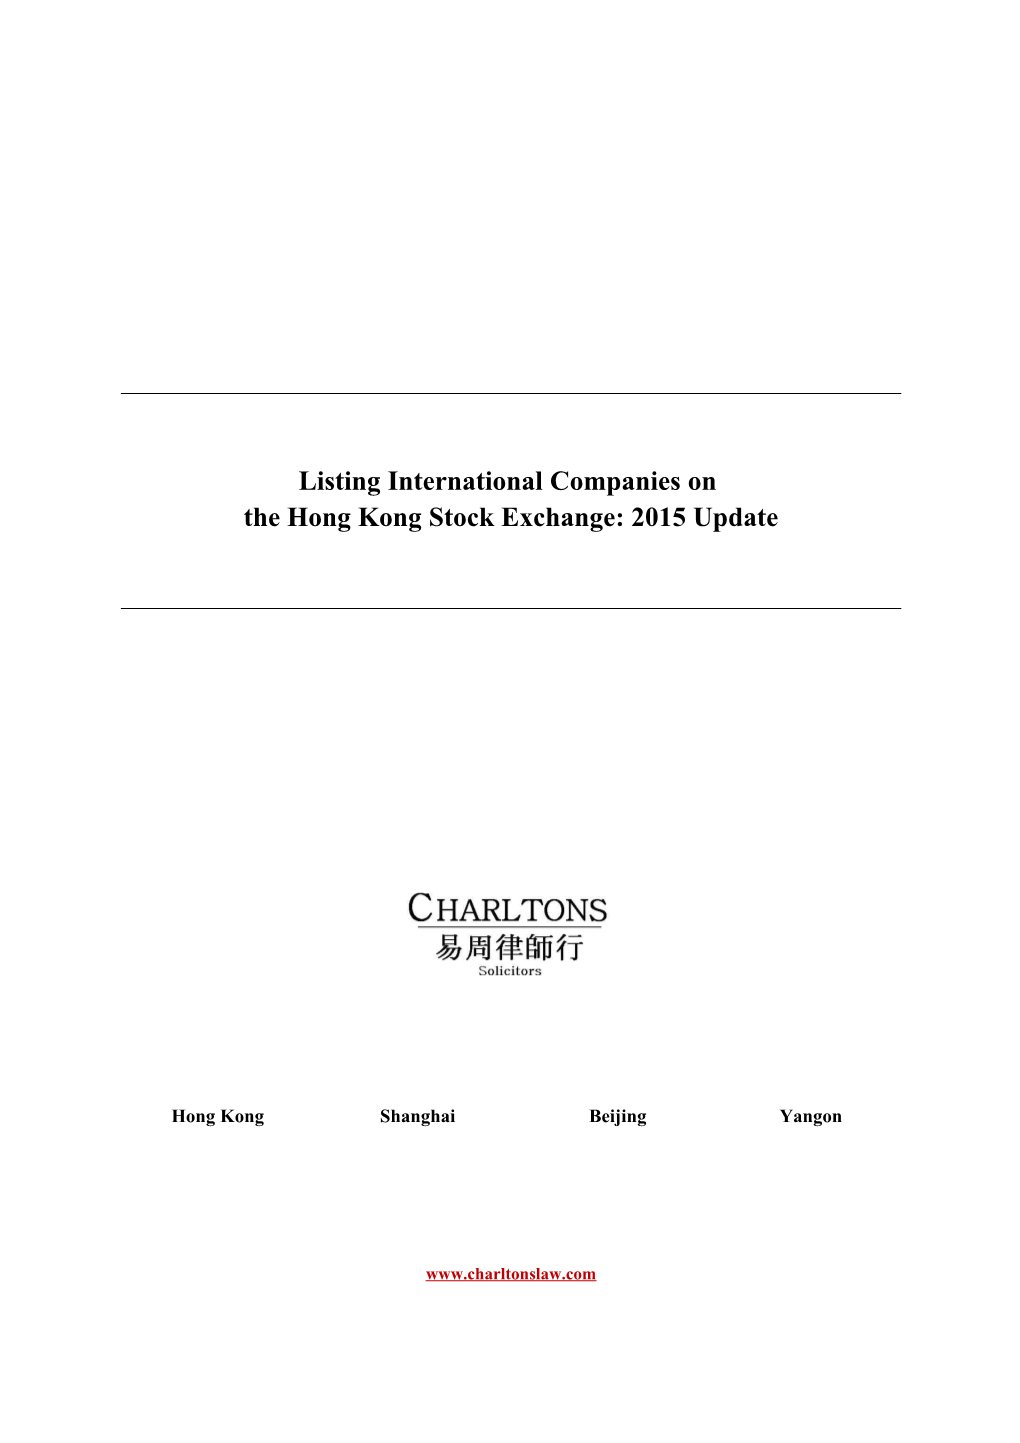 Listing International Companies on the Hong Kong Stock Exchange: 2015 Update